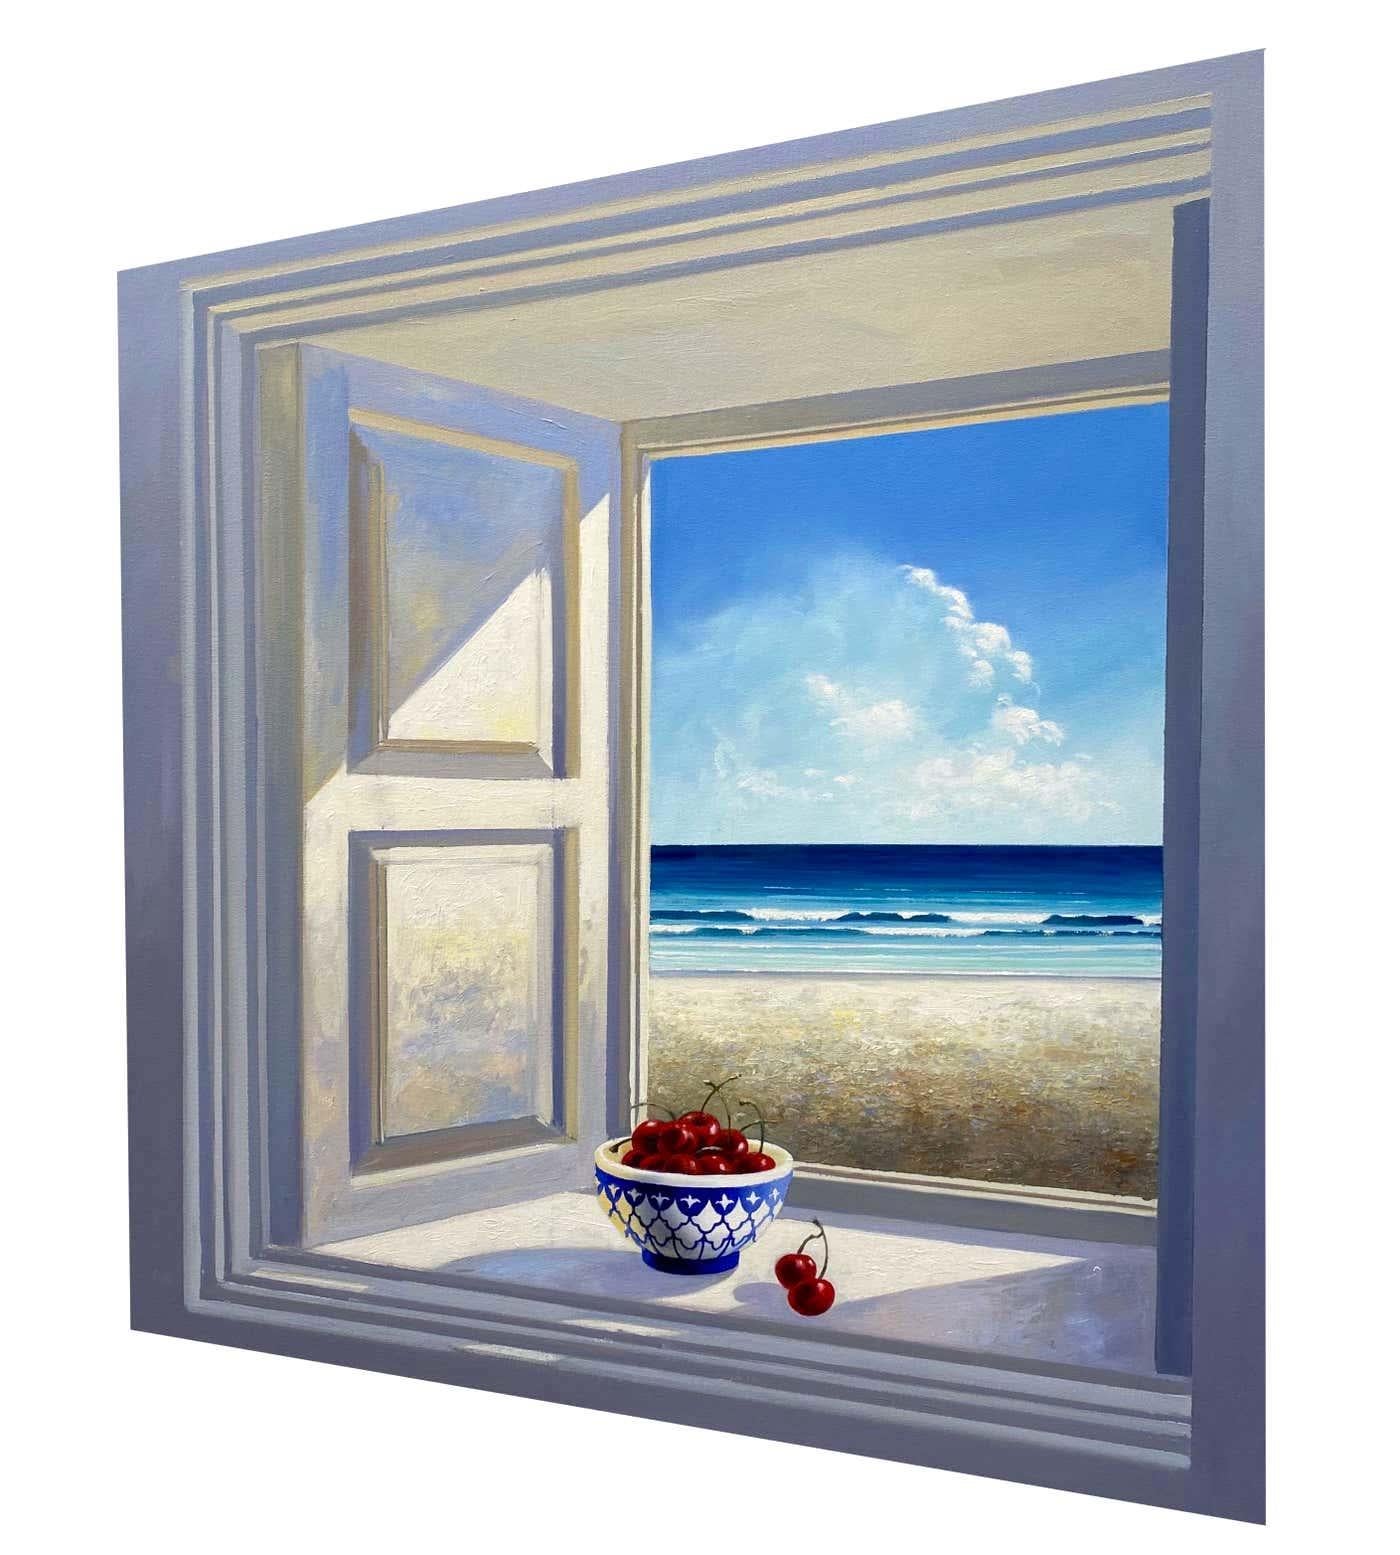 Serenity-original surreal realism still life seascape painting- Modern Art